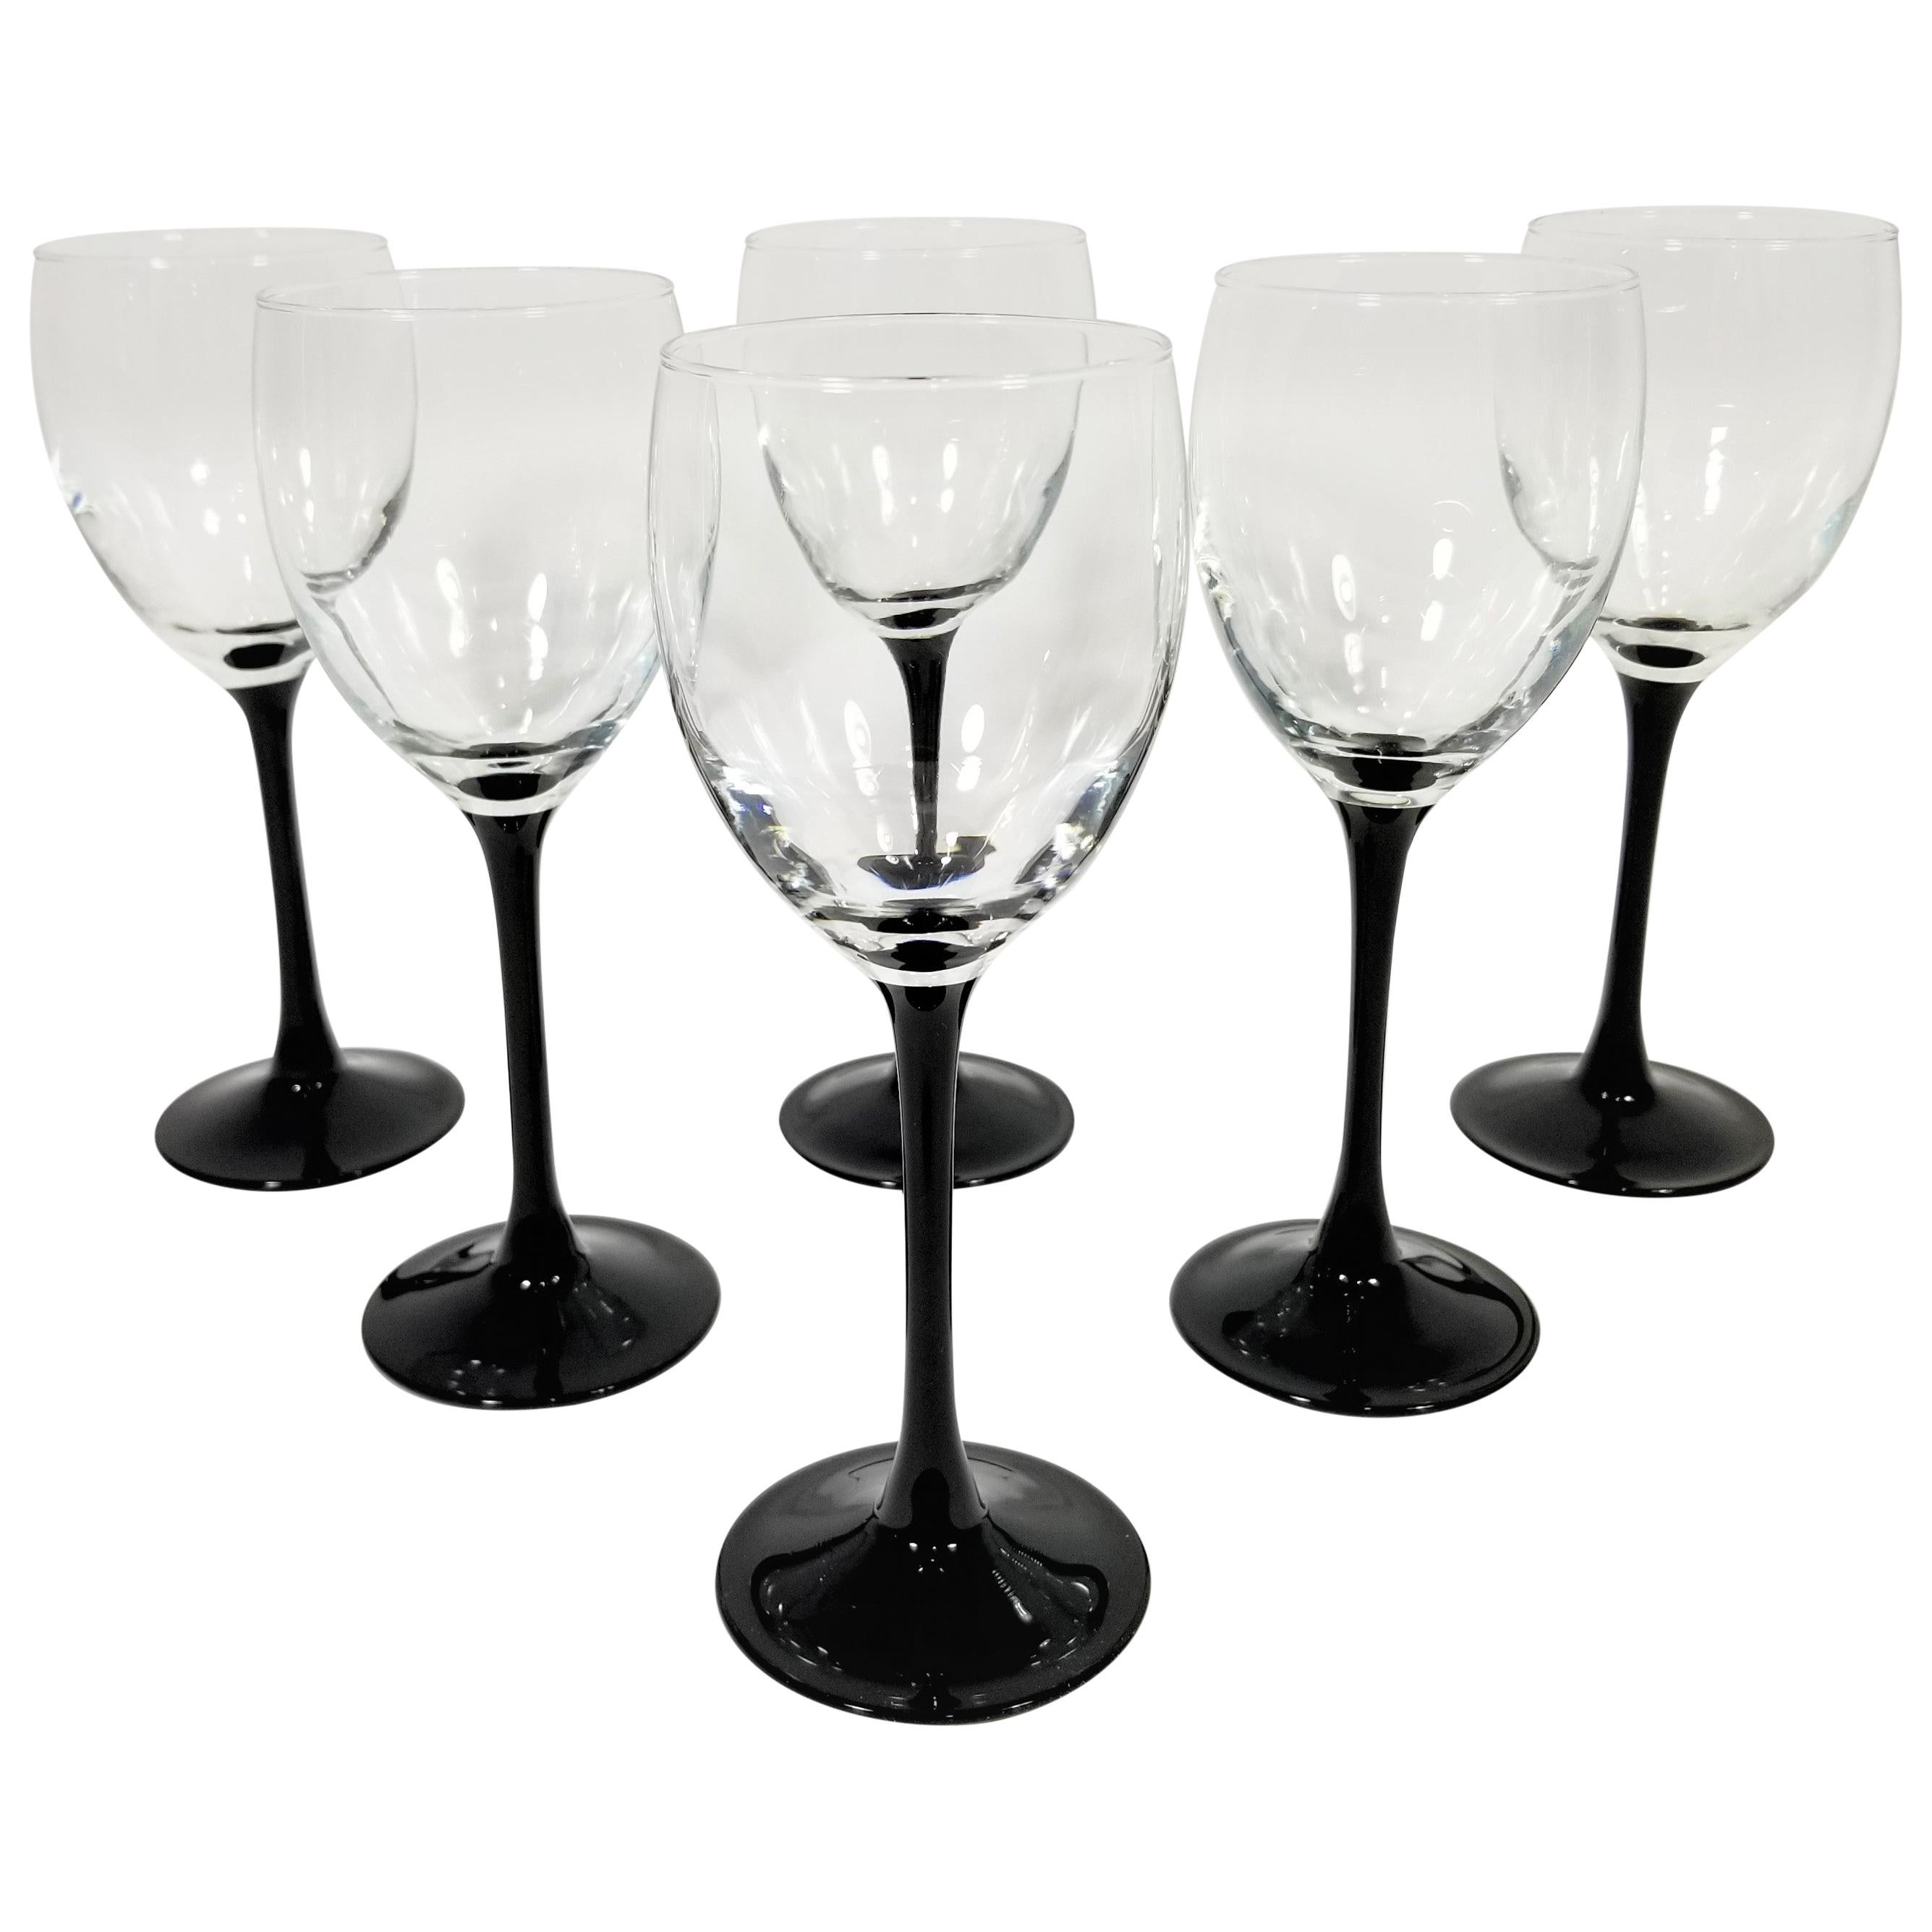 https://a.1stdibscdn.com/french-black-tulip-base-stemware-wine-glasses-made-in-france-for-sale/1121189/f_225557921613713383231/22555792_master.jpg